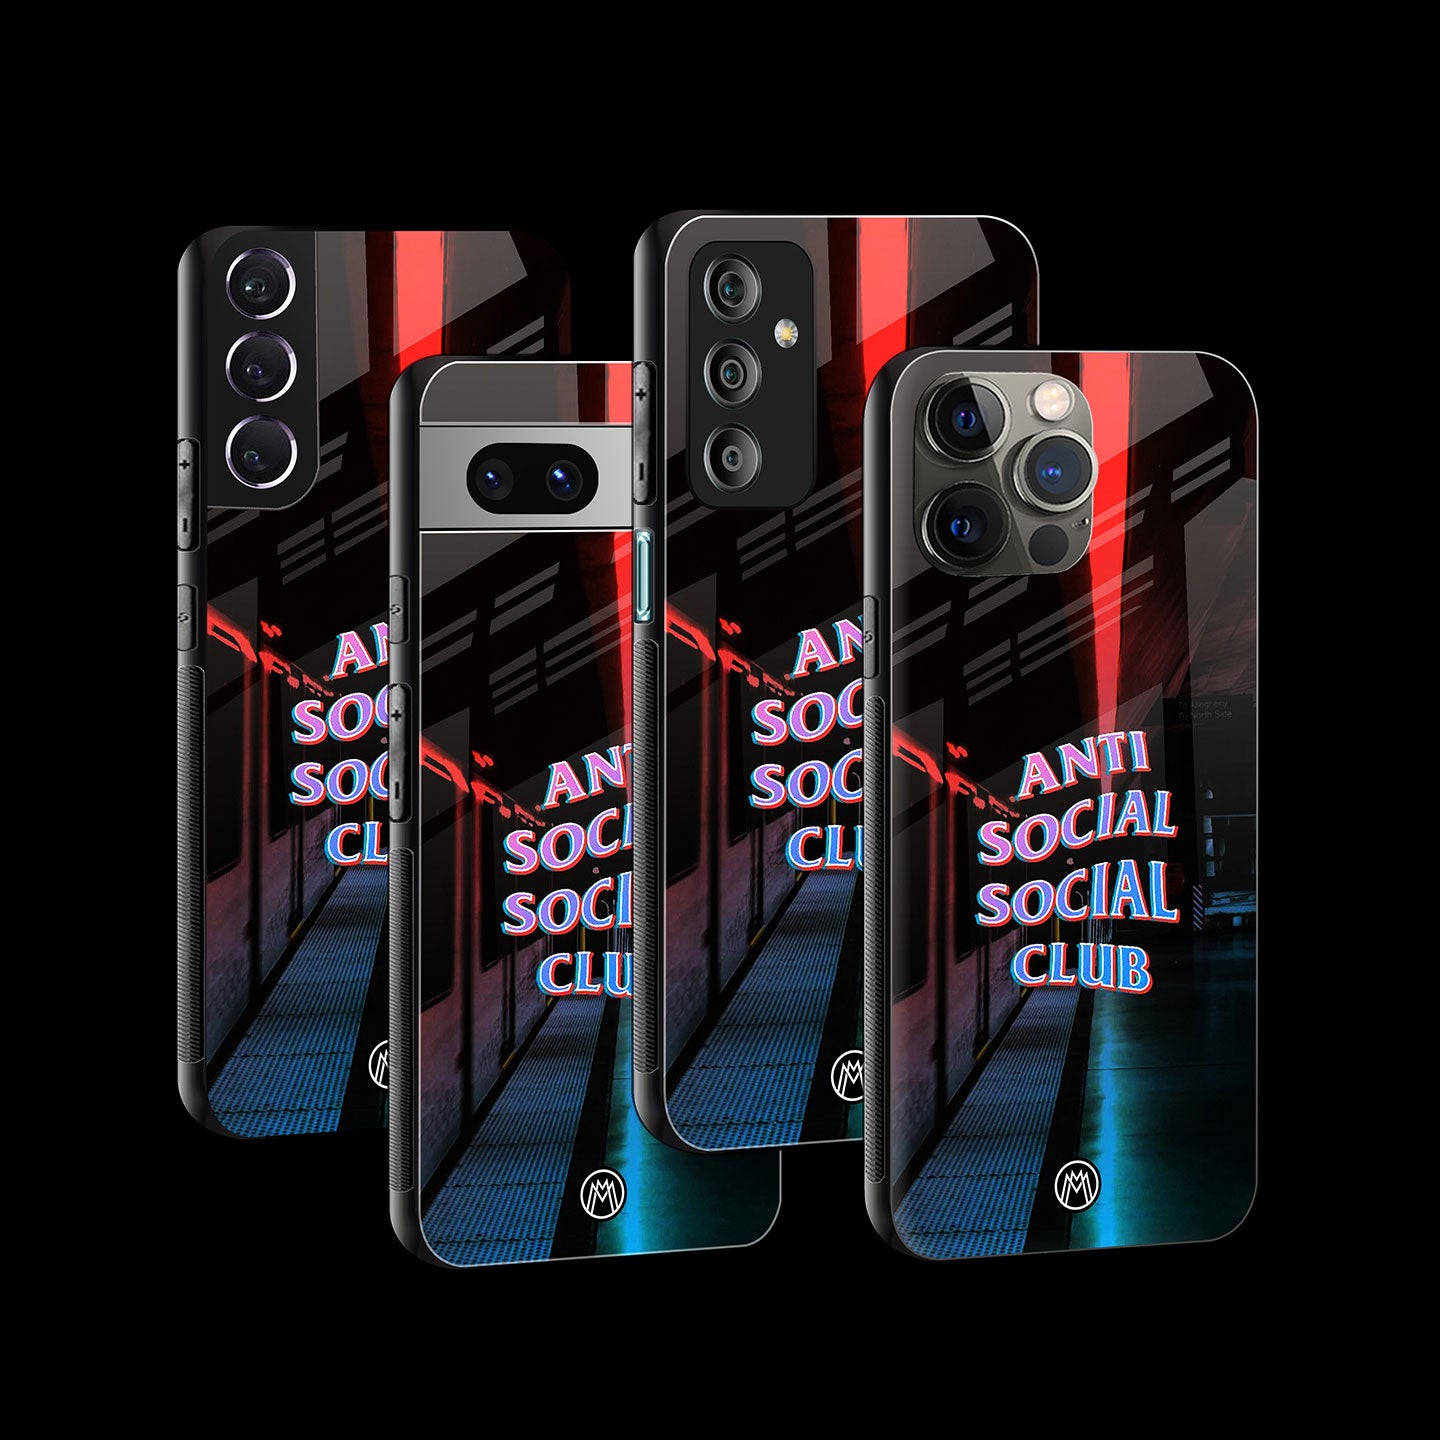 Anti Social Social Club Aesthetic Glass Case Phone Cover